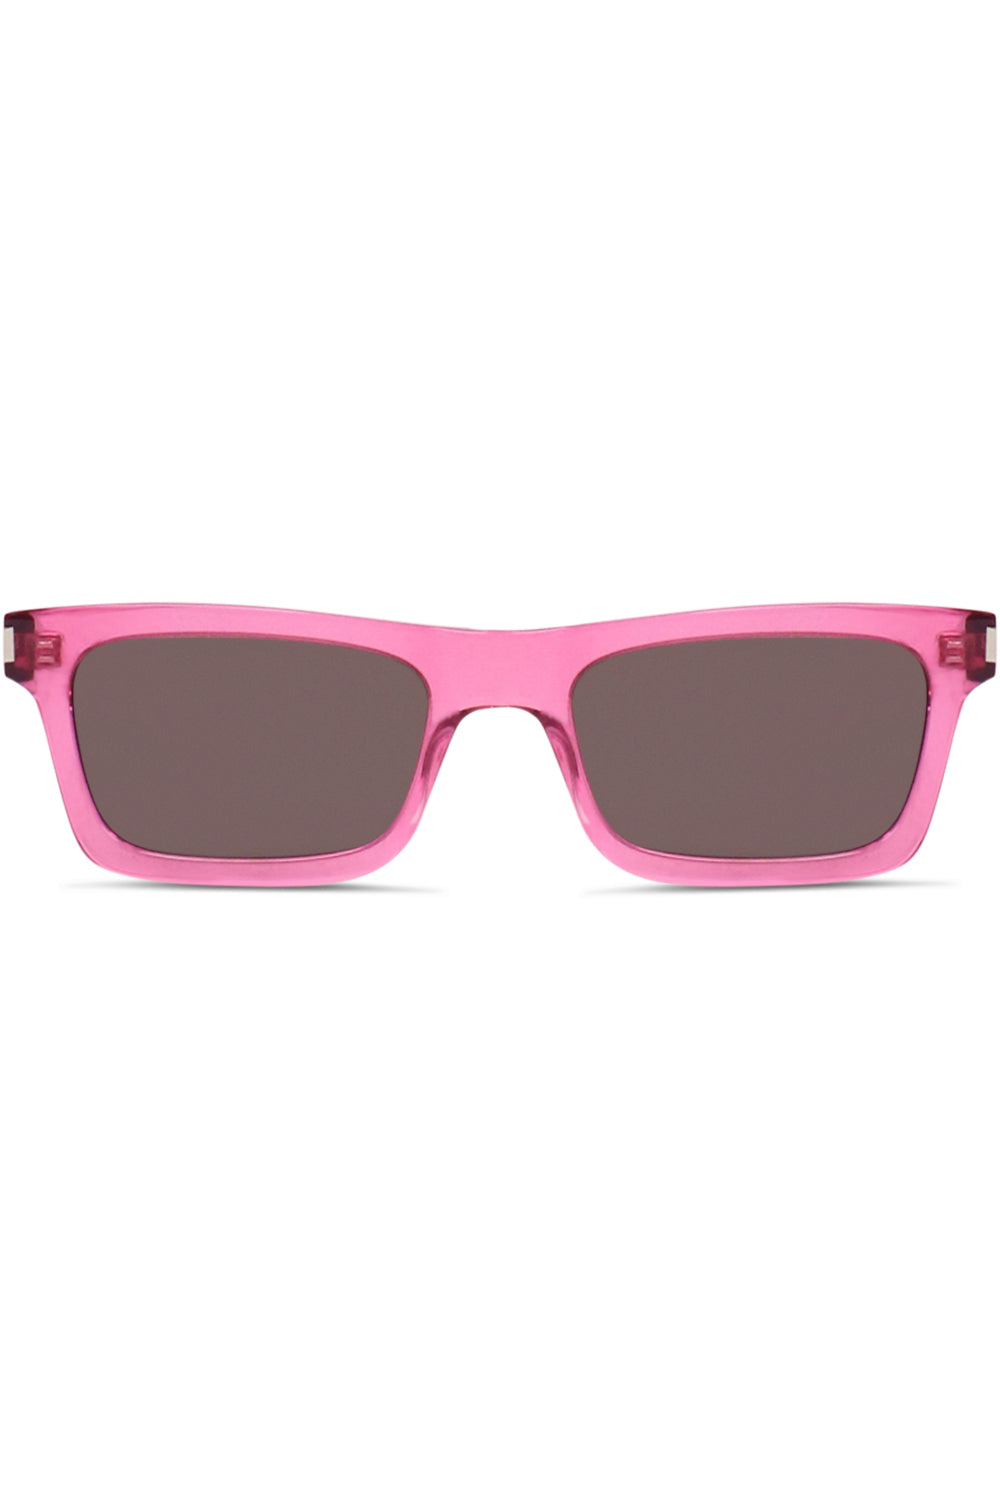 Yves Saint Laurent - SL 462 Sulpice Sunglasses - Transparent Cyclamen Pink  Purple - Sunglasses - Saint Laurent Eyewear - Avvenice